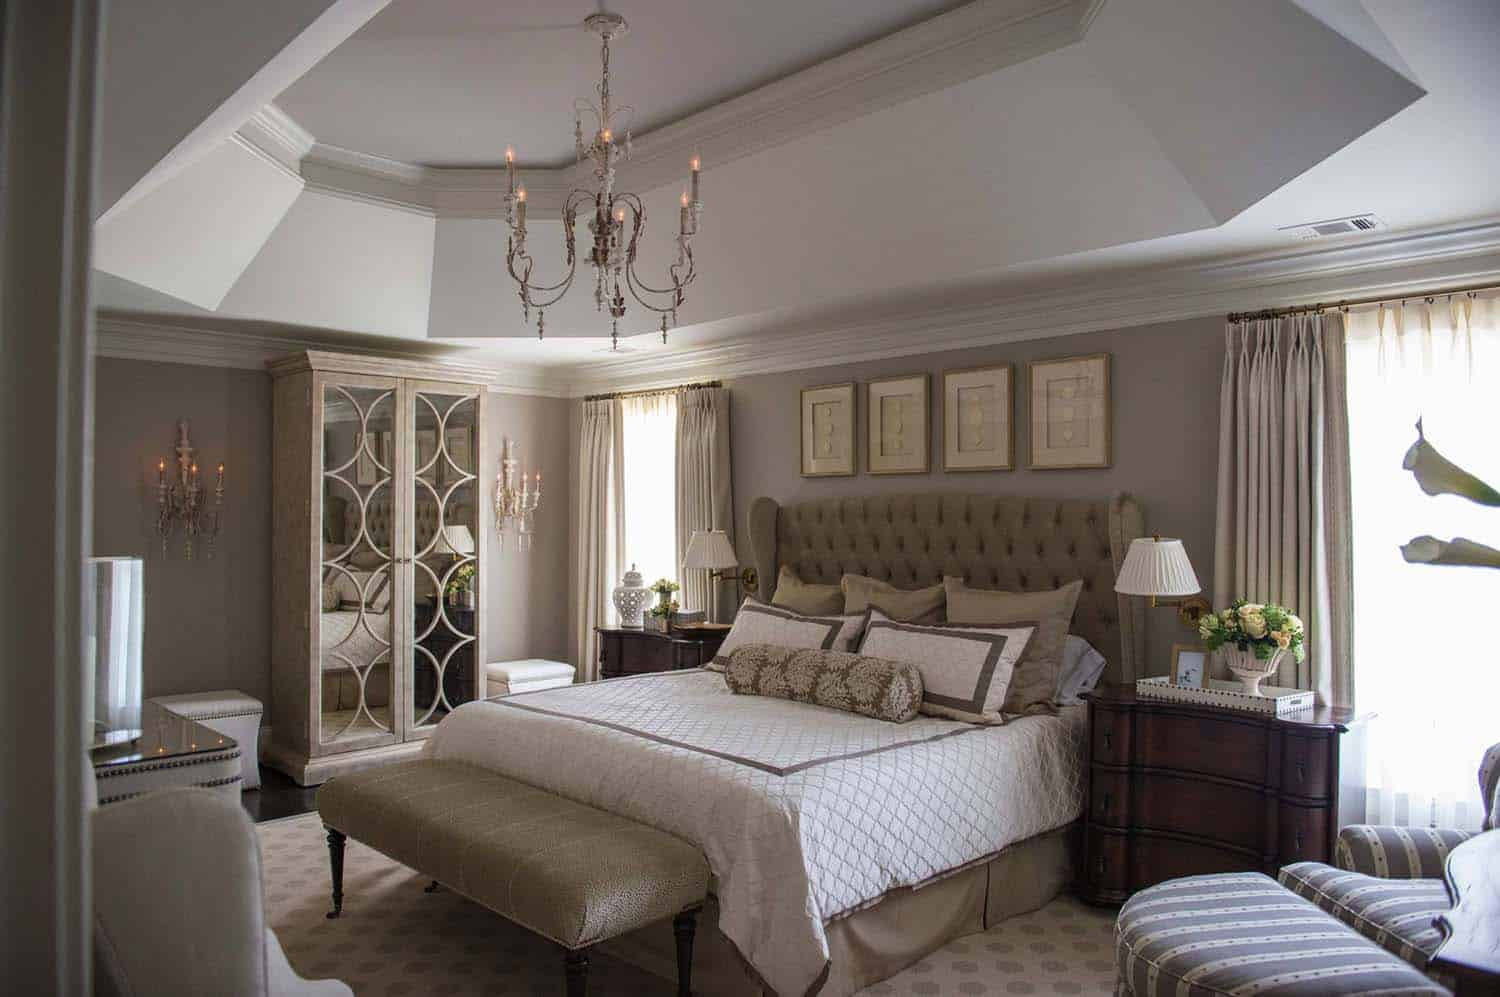 Master Bedroom Bedding Ideas
 20 Serene And Elegant Master Bedroom Decorating Ideas